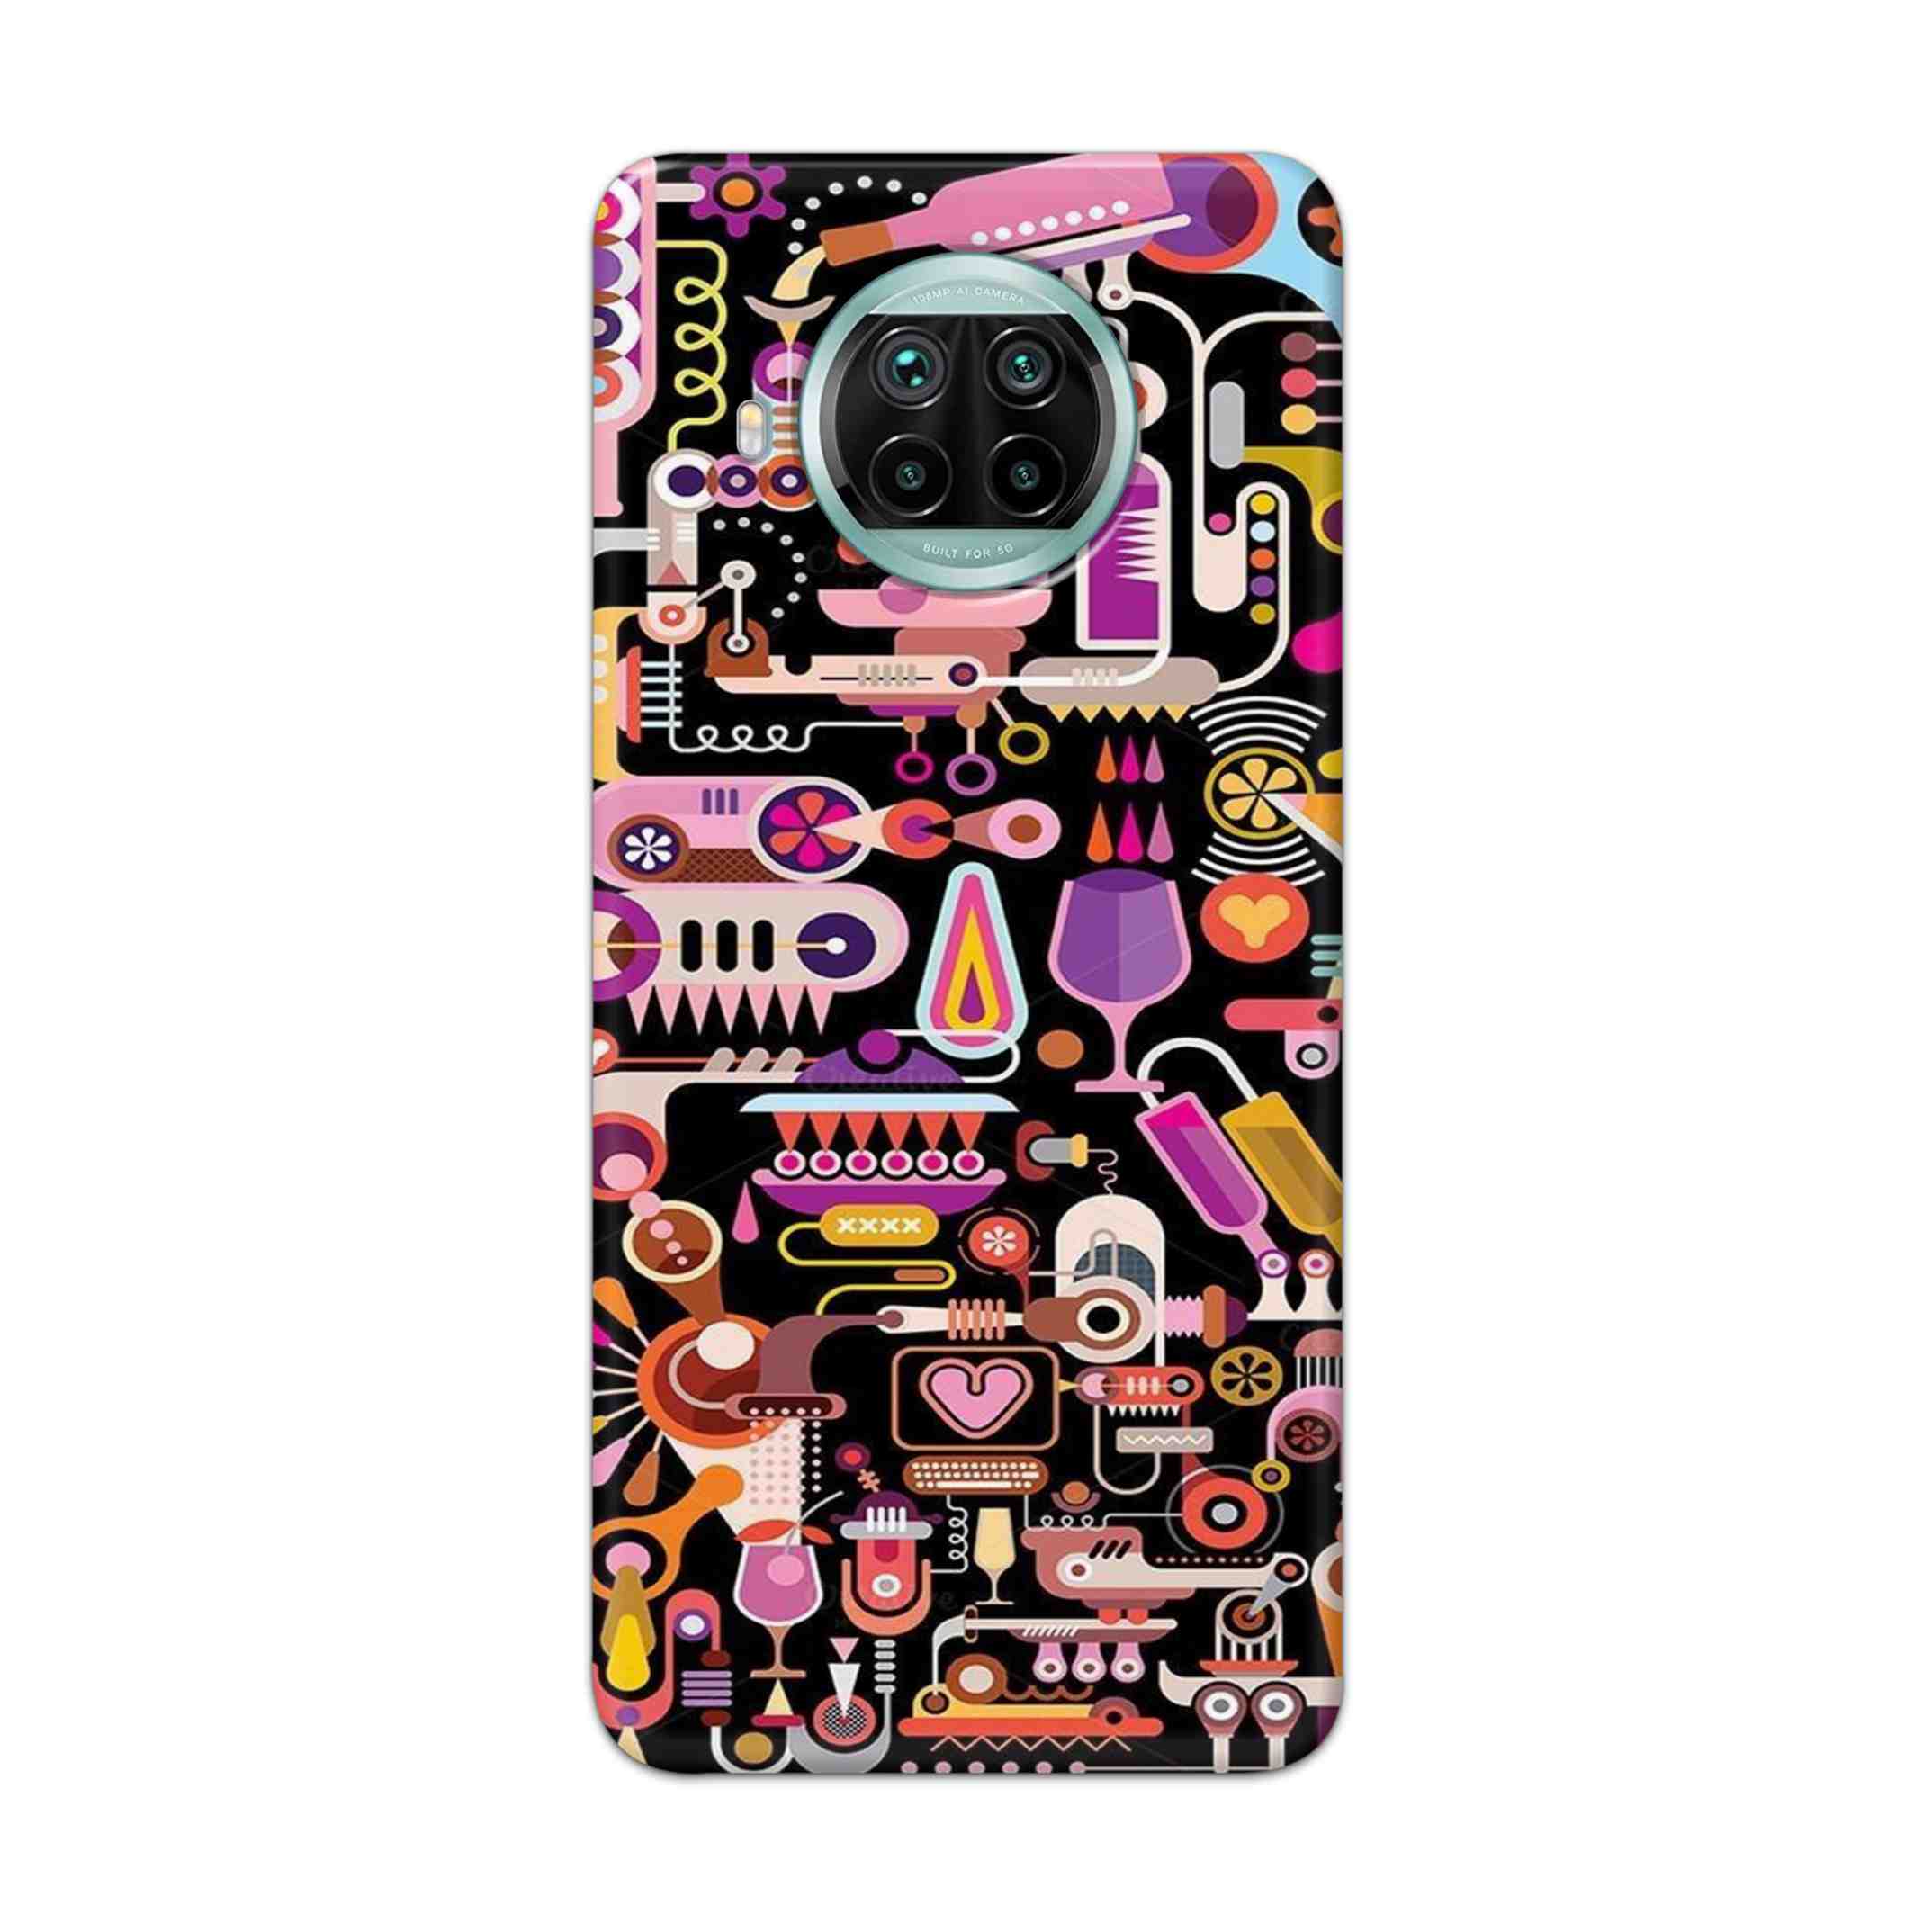 Buy Lab Art Hard Back Mobile Phone Case Cover For Xiaomi Mi 10i Online